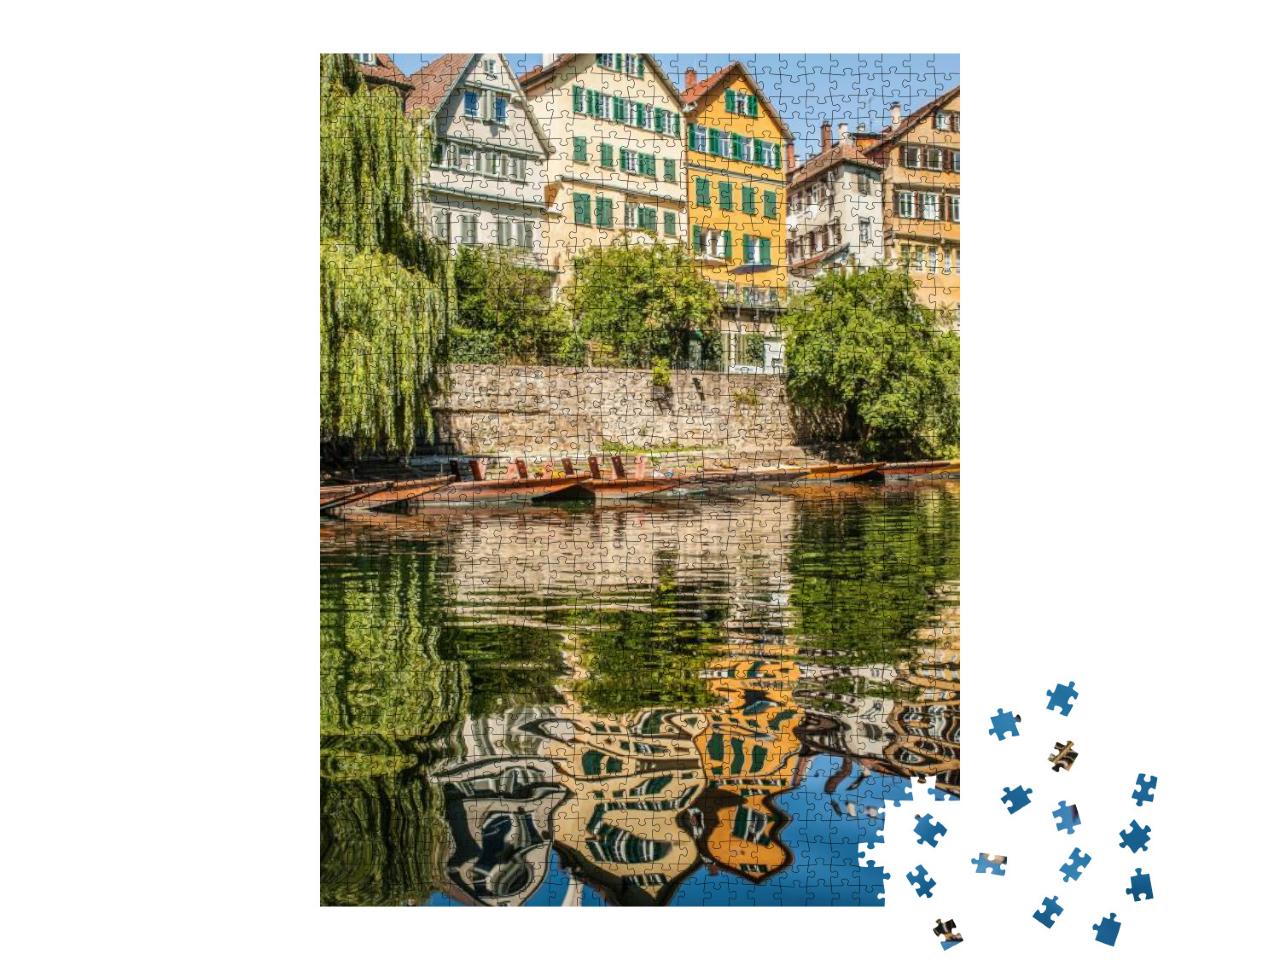 Puzzle 1000 Teile „Tübingen, Altstadt am Neckarufer, Deutschland“